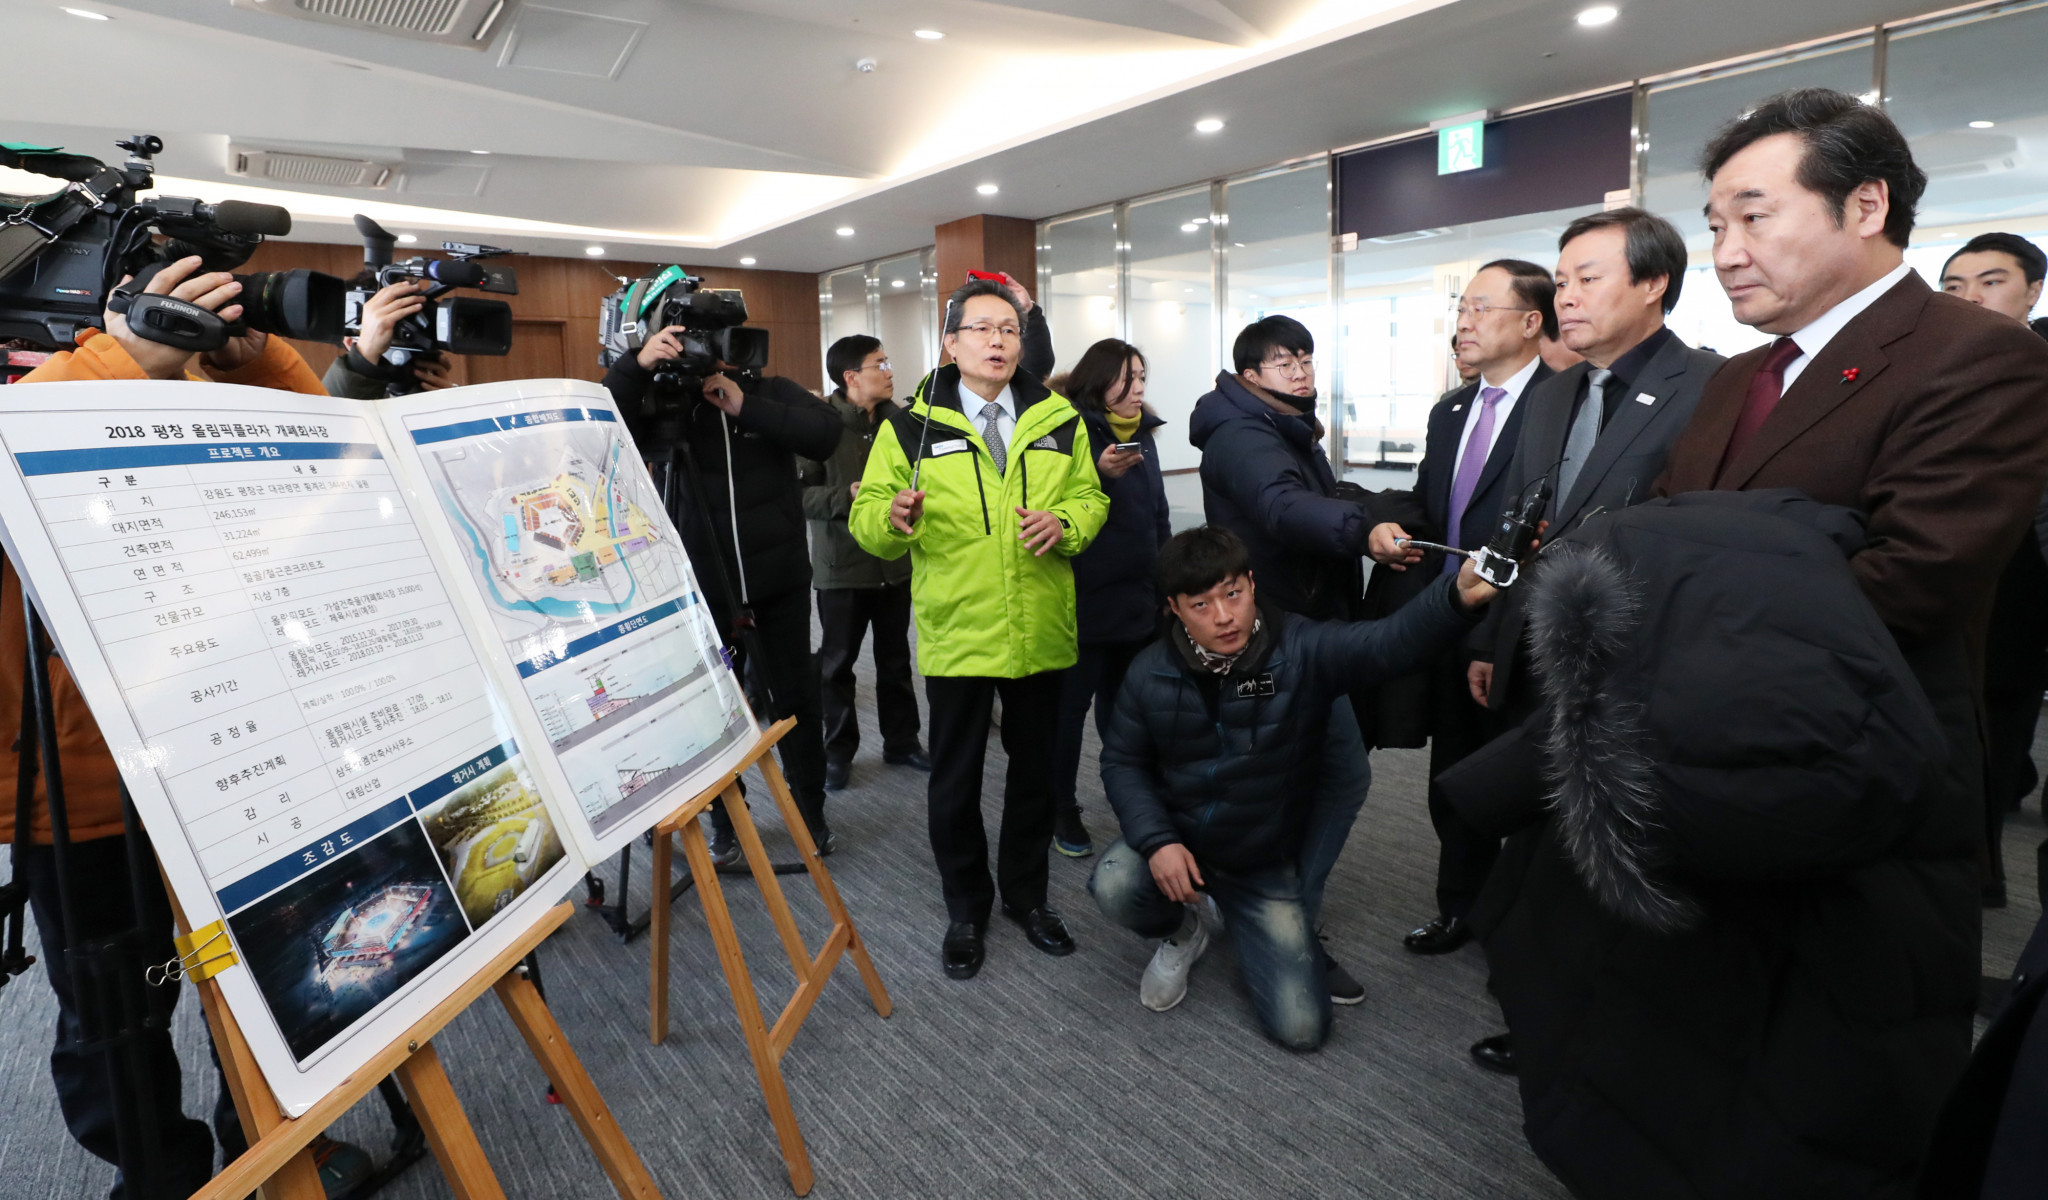 South Korea's Prime Minister Lee Nak-Yeon has visited Pyeongchang 2018 venues ©Pyeongchang 2018